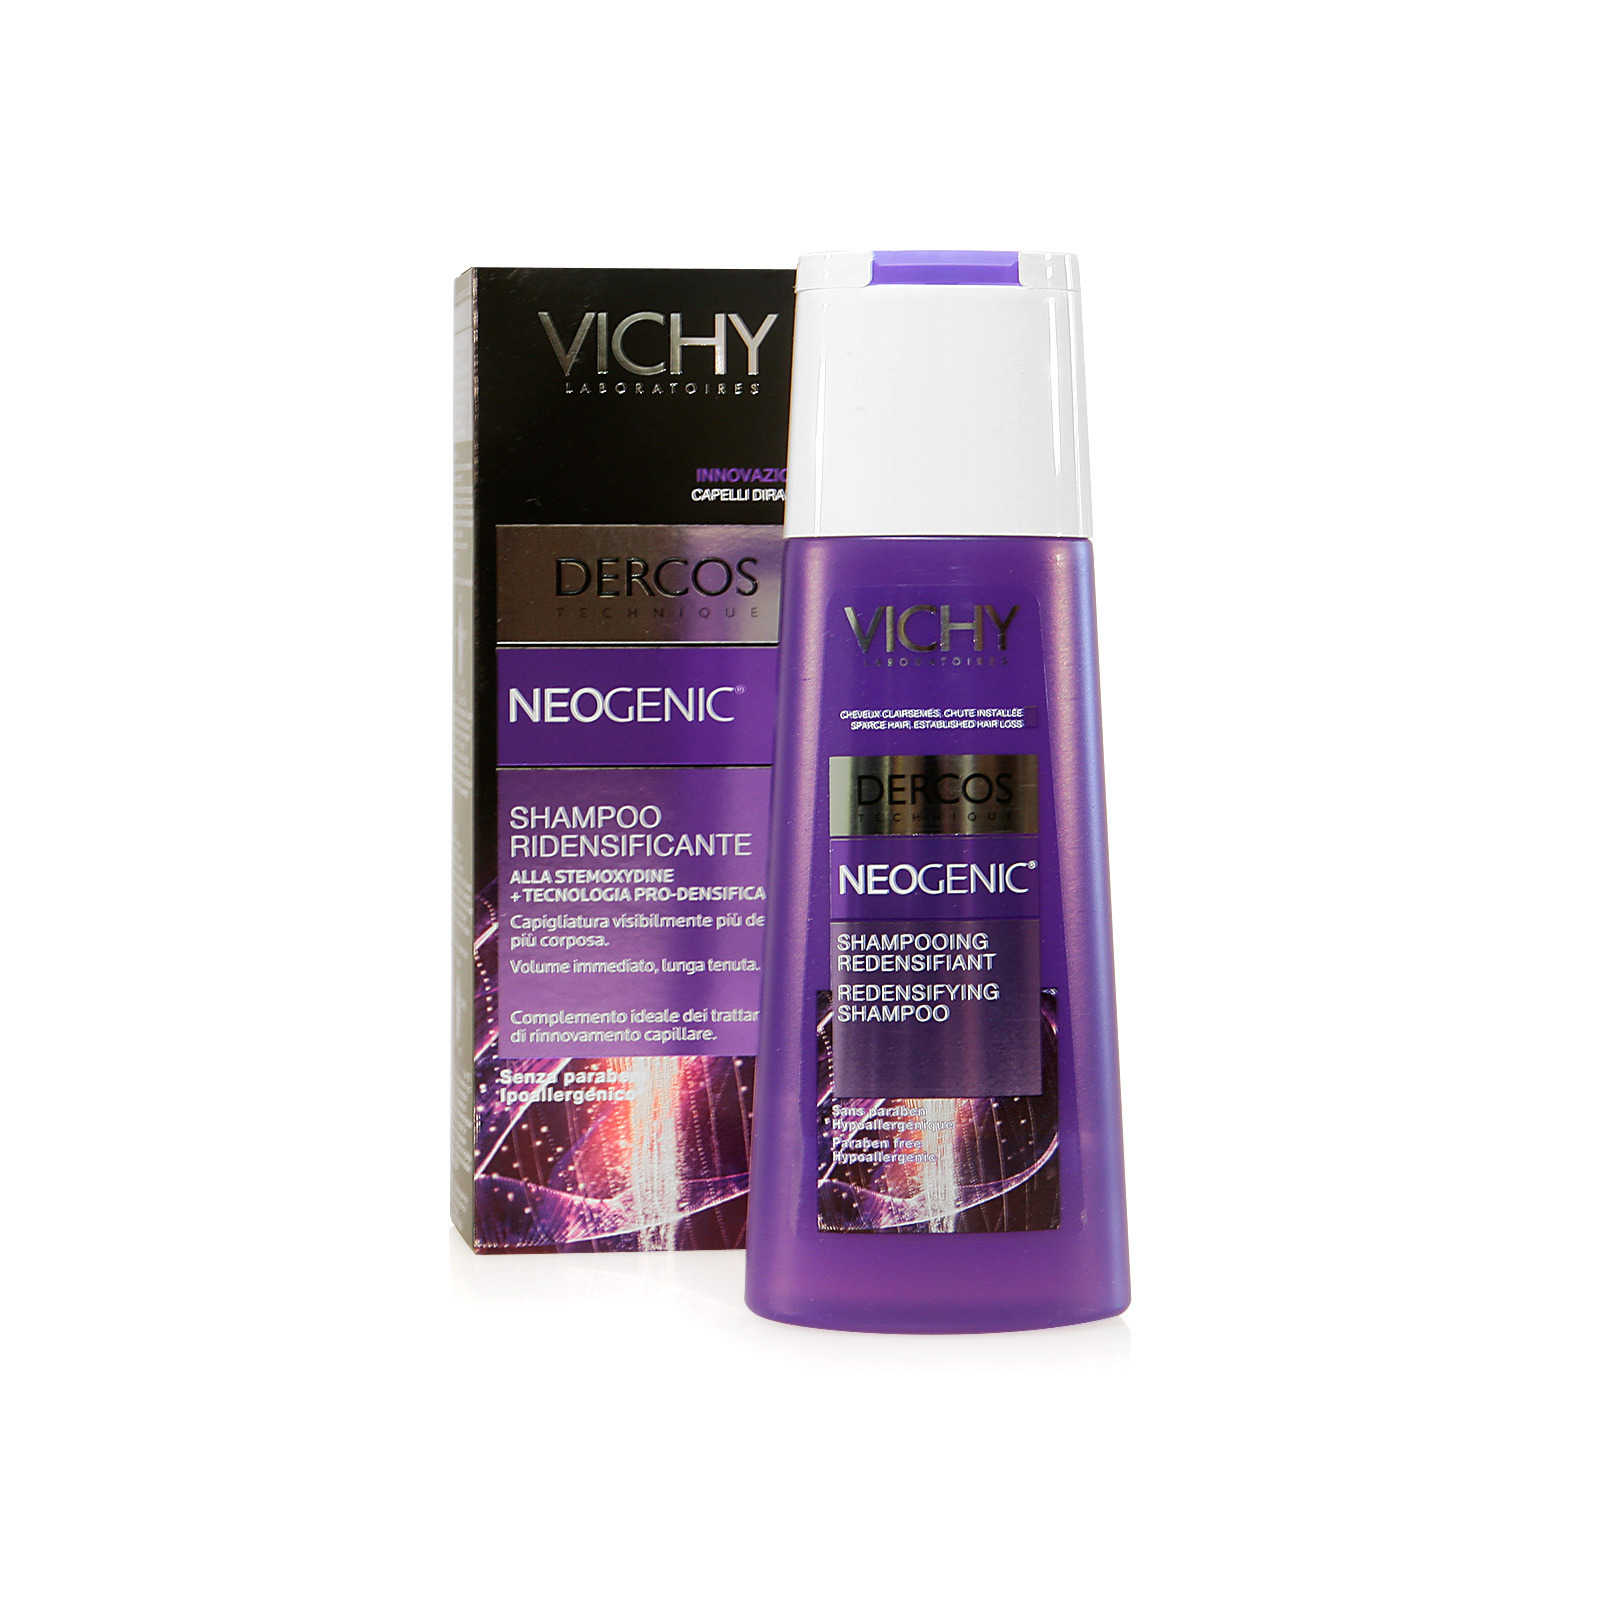 Vichy - Dercos - Neogenic - Shampoo Ridensificante